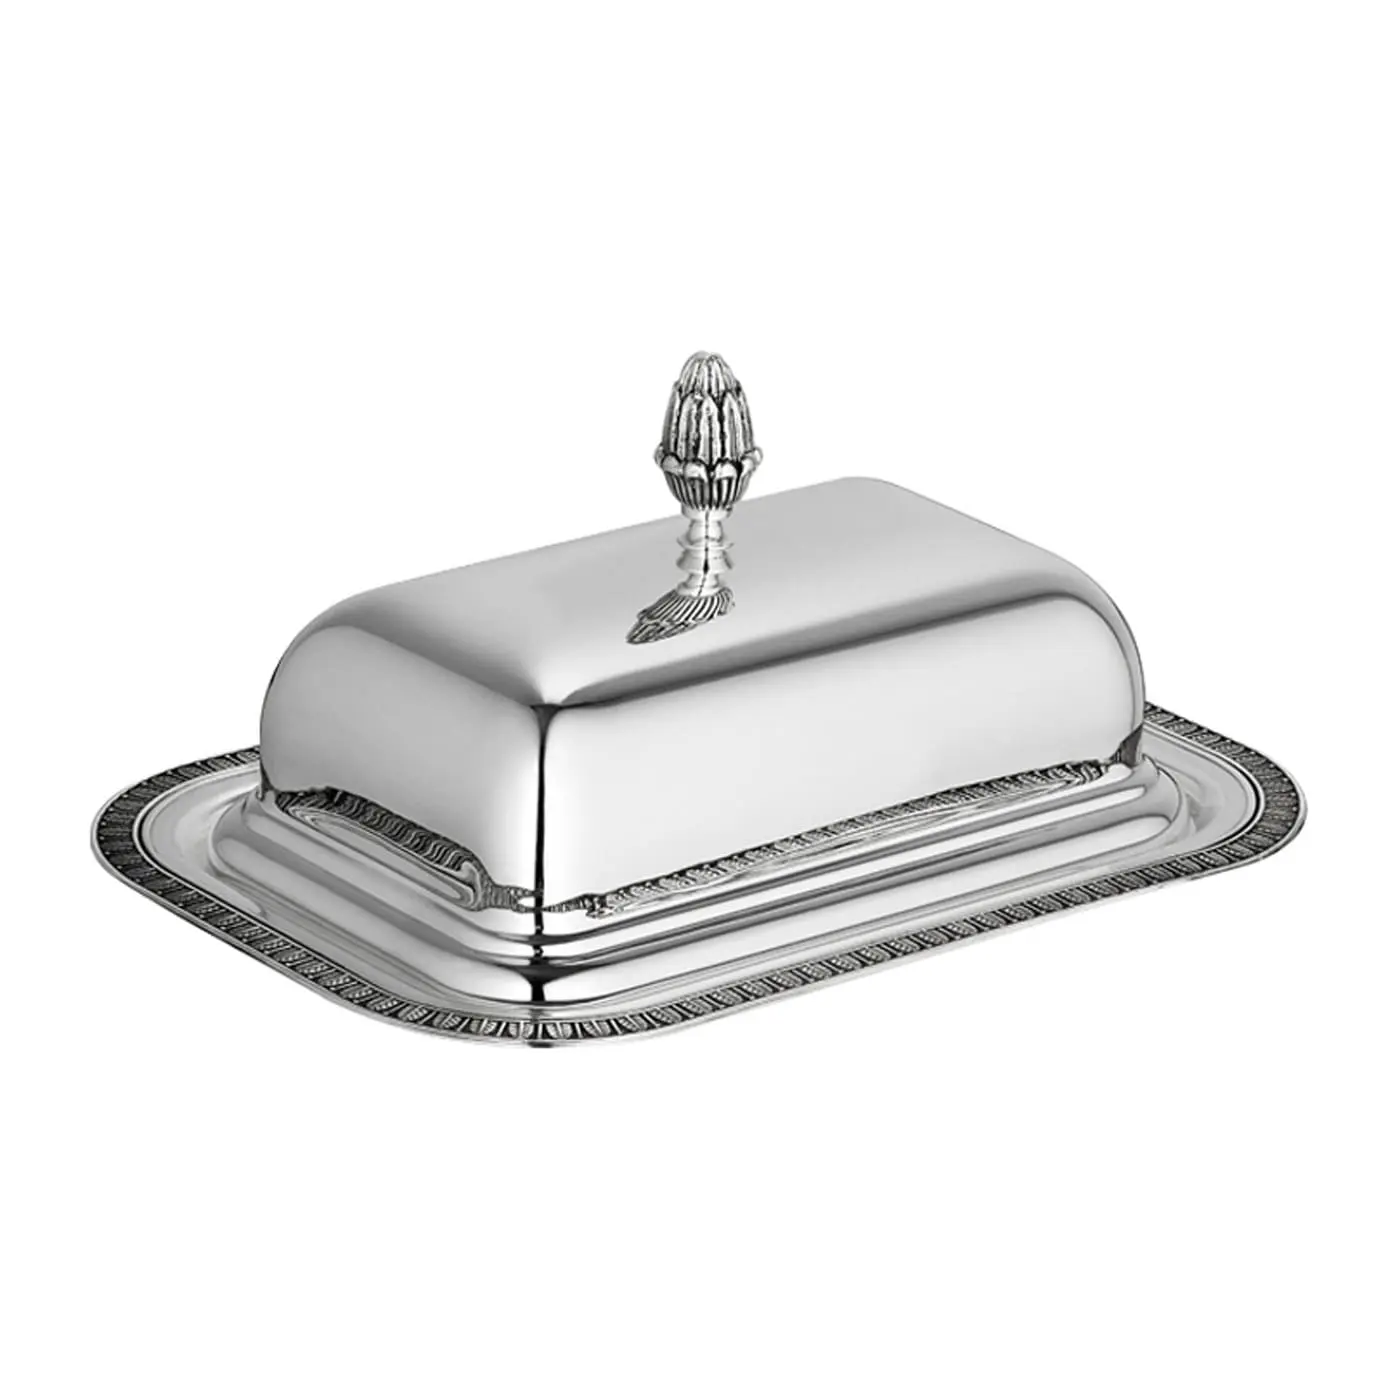 Christofle decanter rectangular butter dish malmaison silver alloy 7x19 cm 4224740